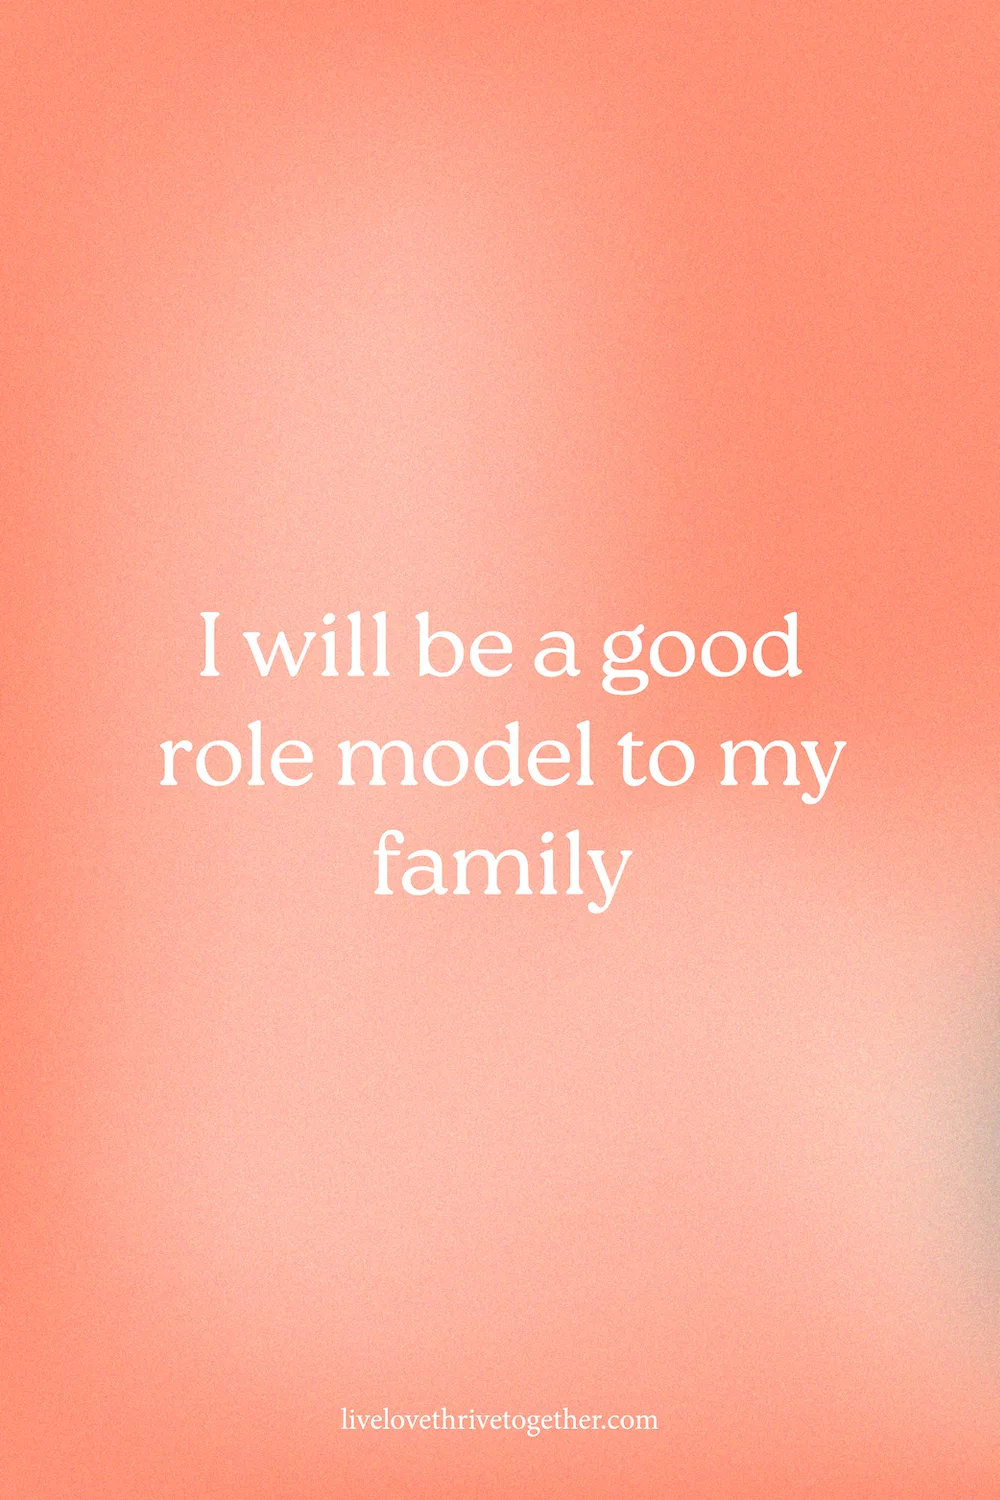 Seré un buen modelo para mi familia | Afirmaciones del lunes